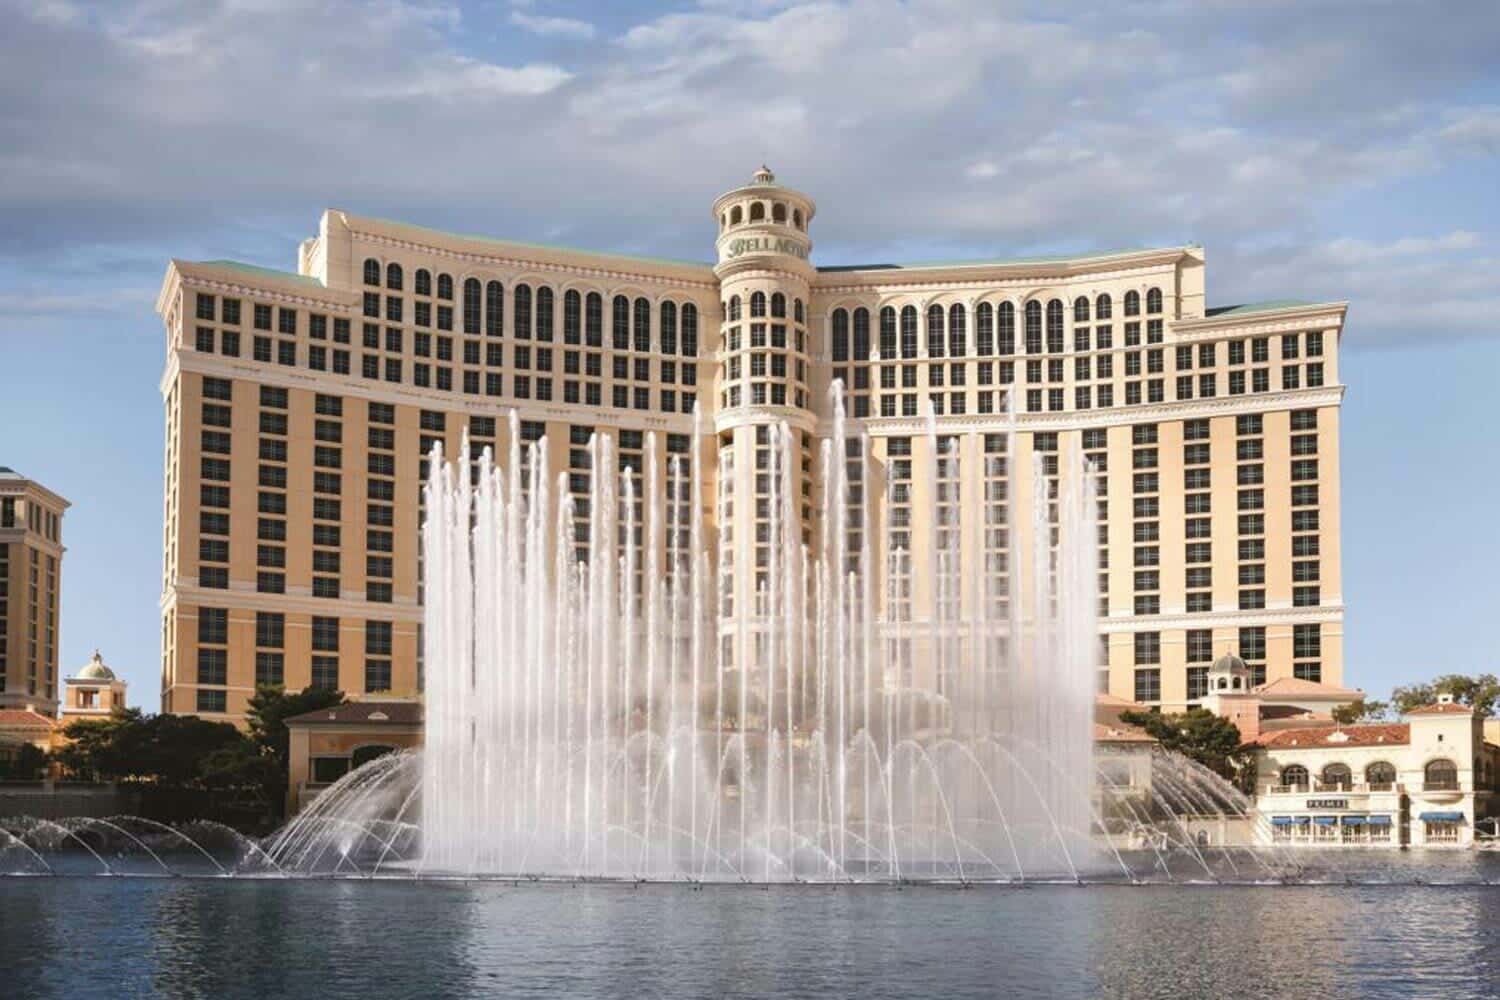 2021 BELLAGIO GARDENS CHINESE NEW YEAR DISPLAY at Bellagio Hotel Las Vegas